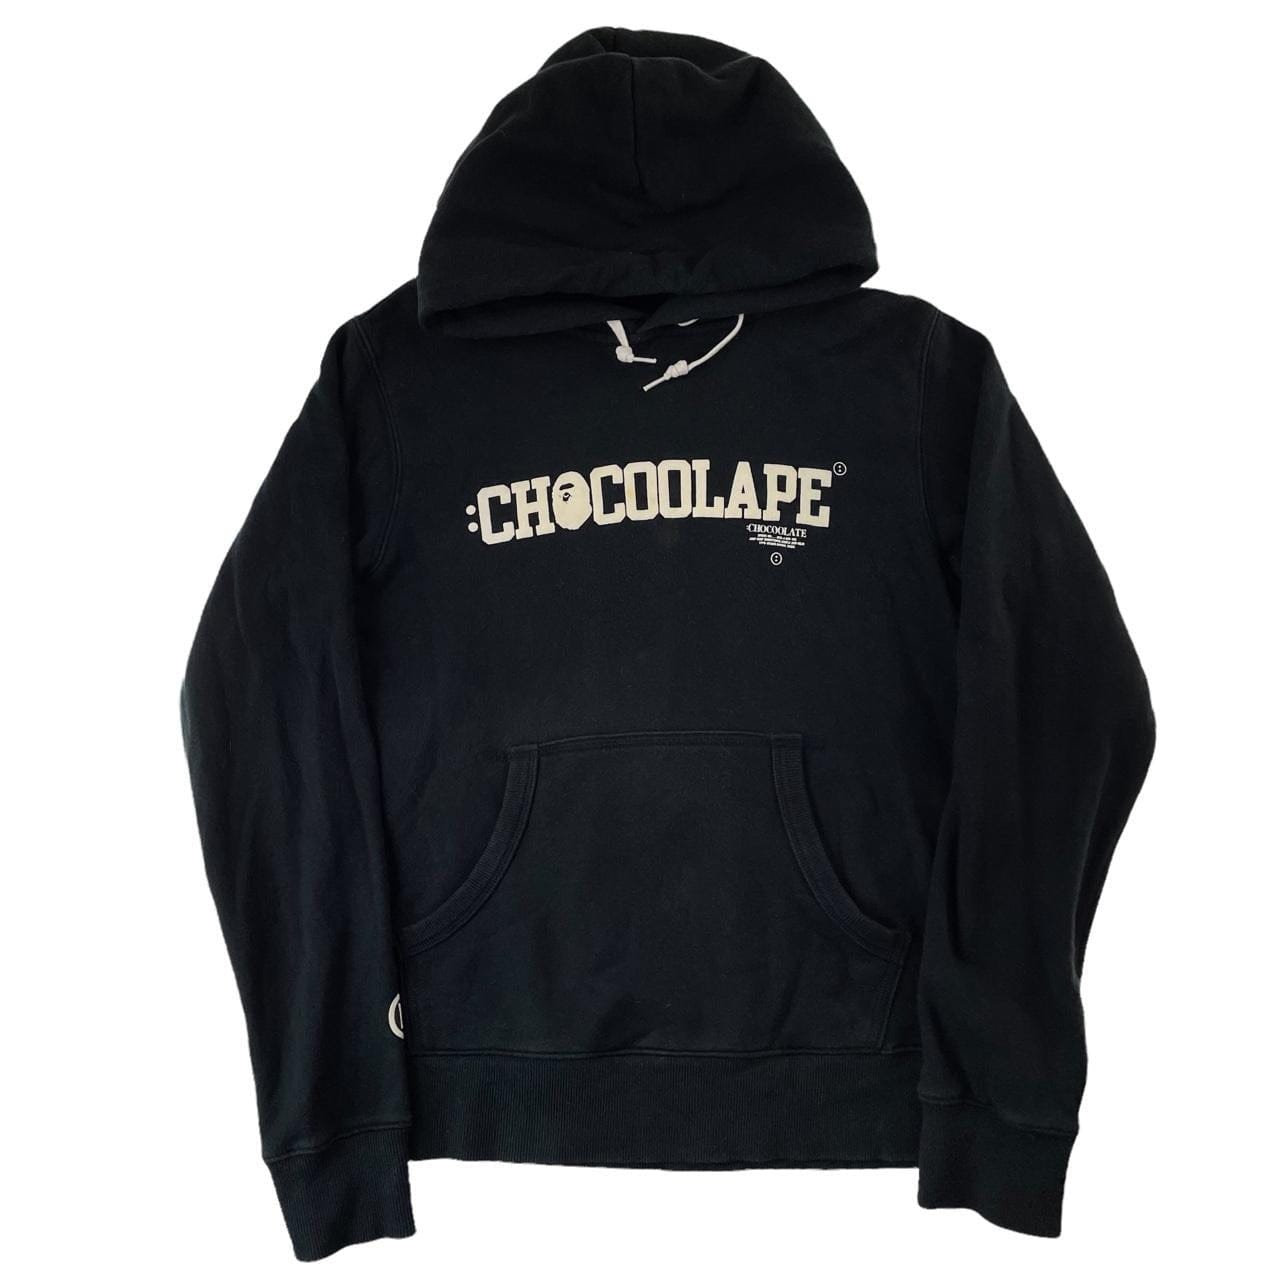 Vintage Bape chocoolate logo hoodie size XS - second wave vintage store